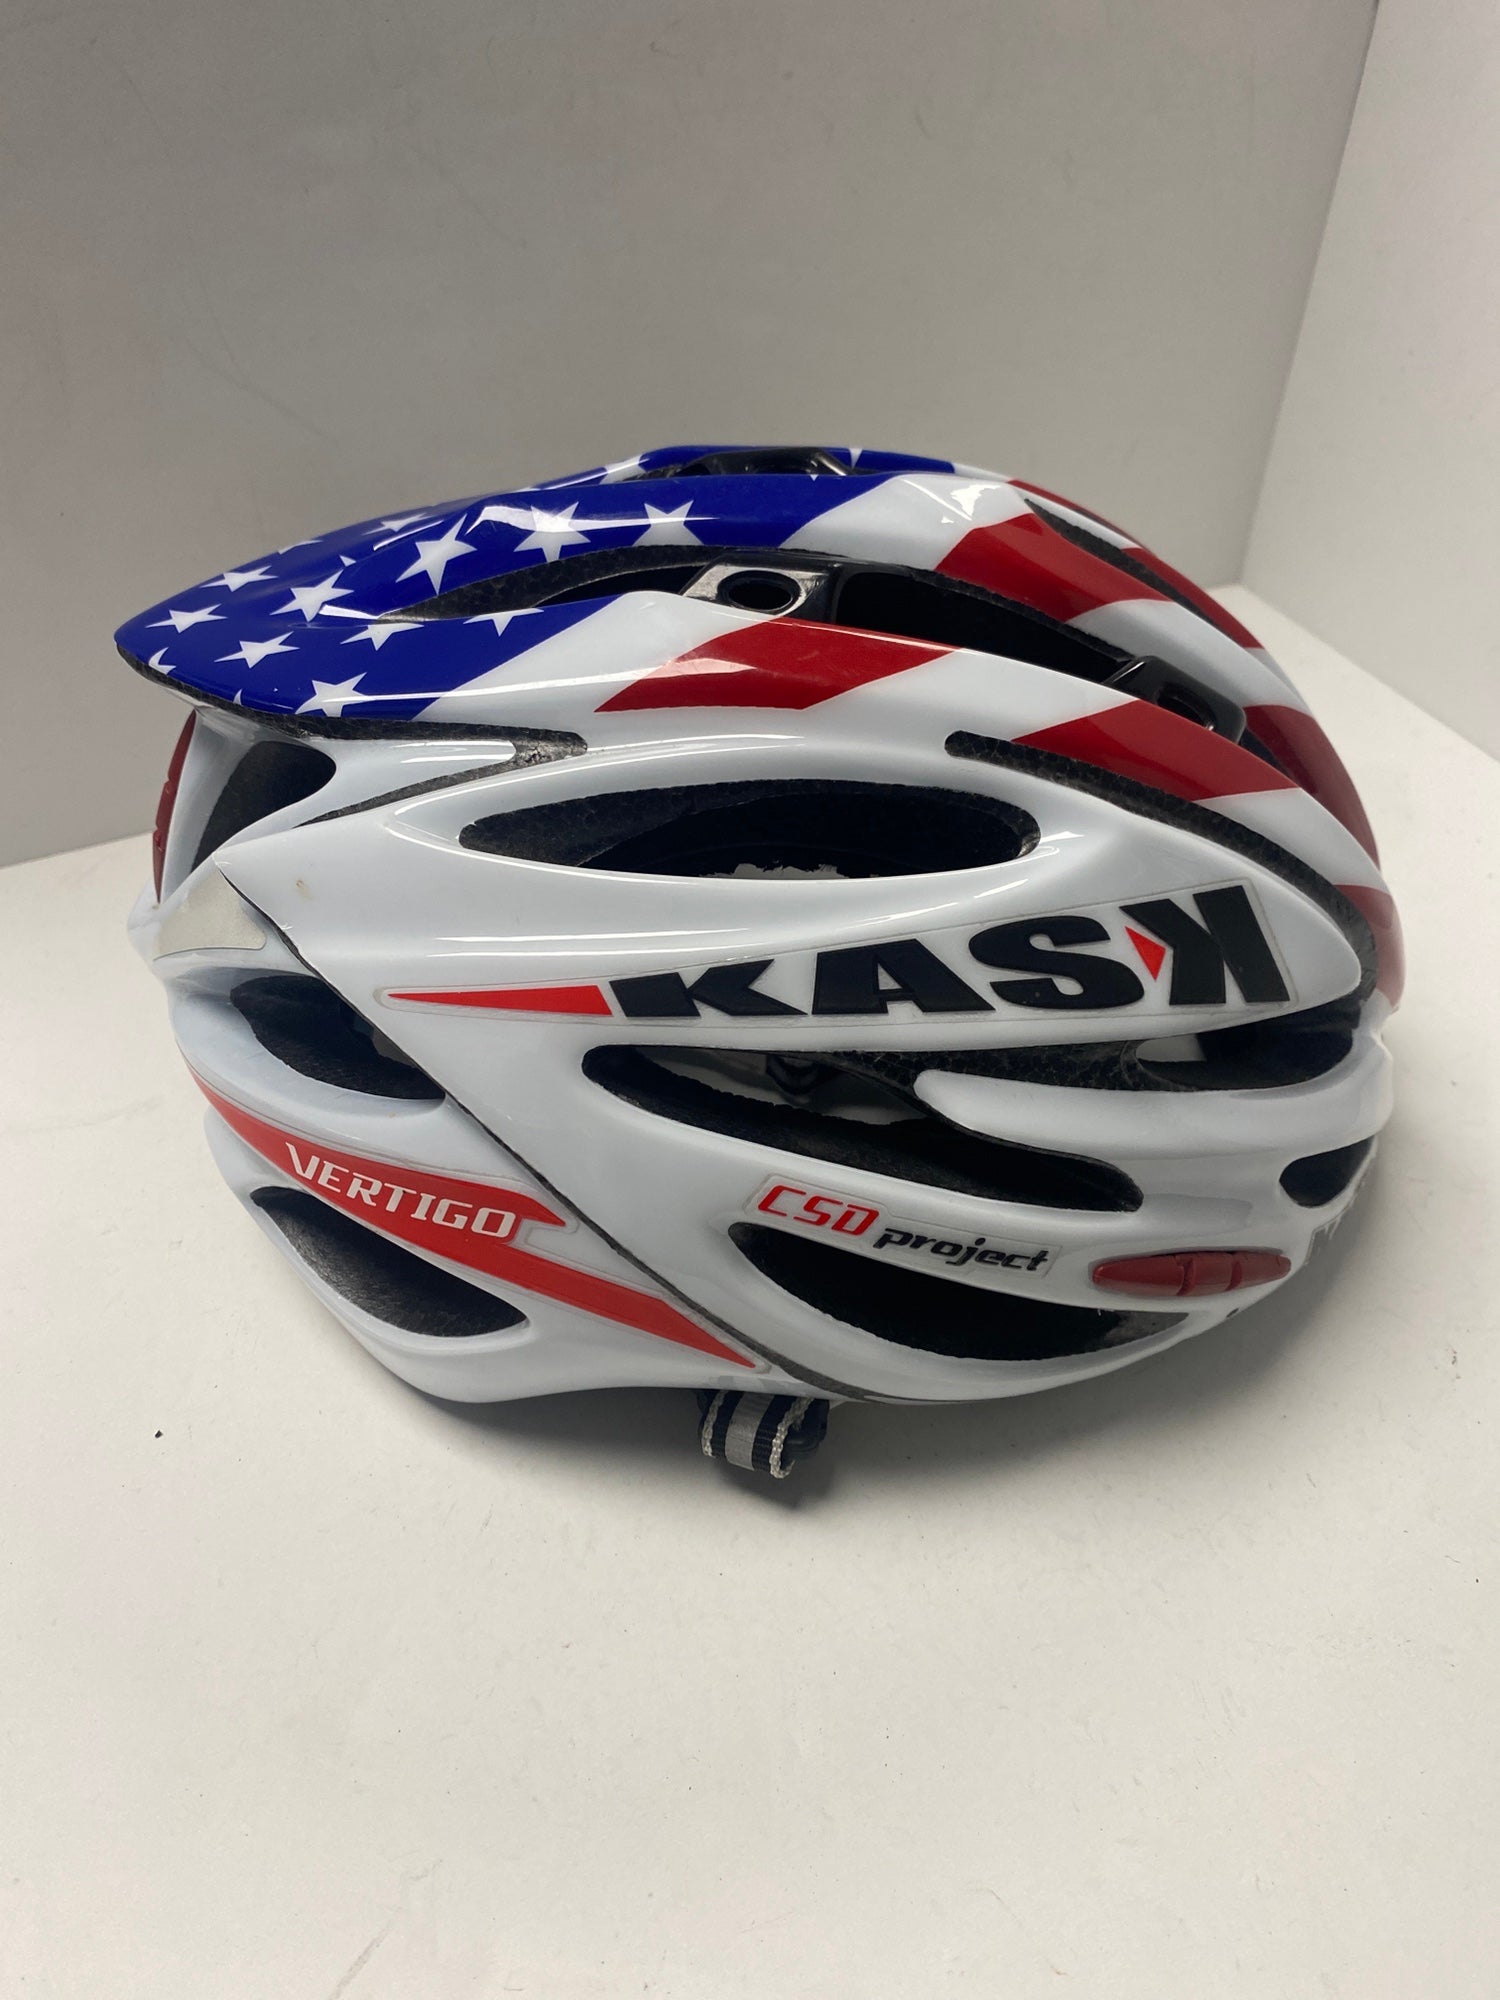 Kask Vertigo Cycling Bicycle Bike Helmet Limited Edition Brazil Flag size Medium 